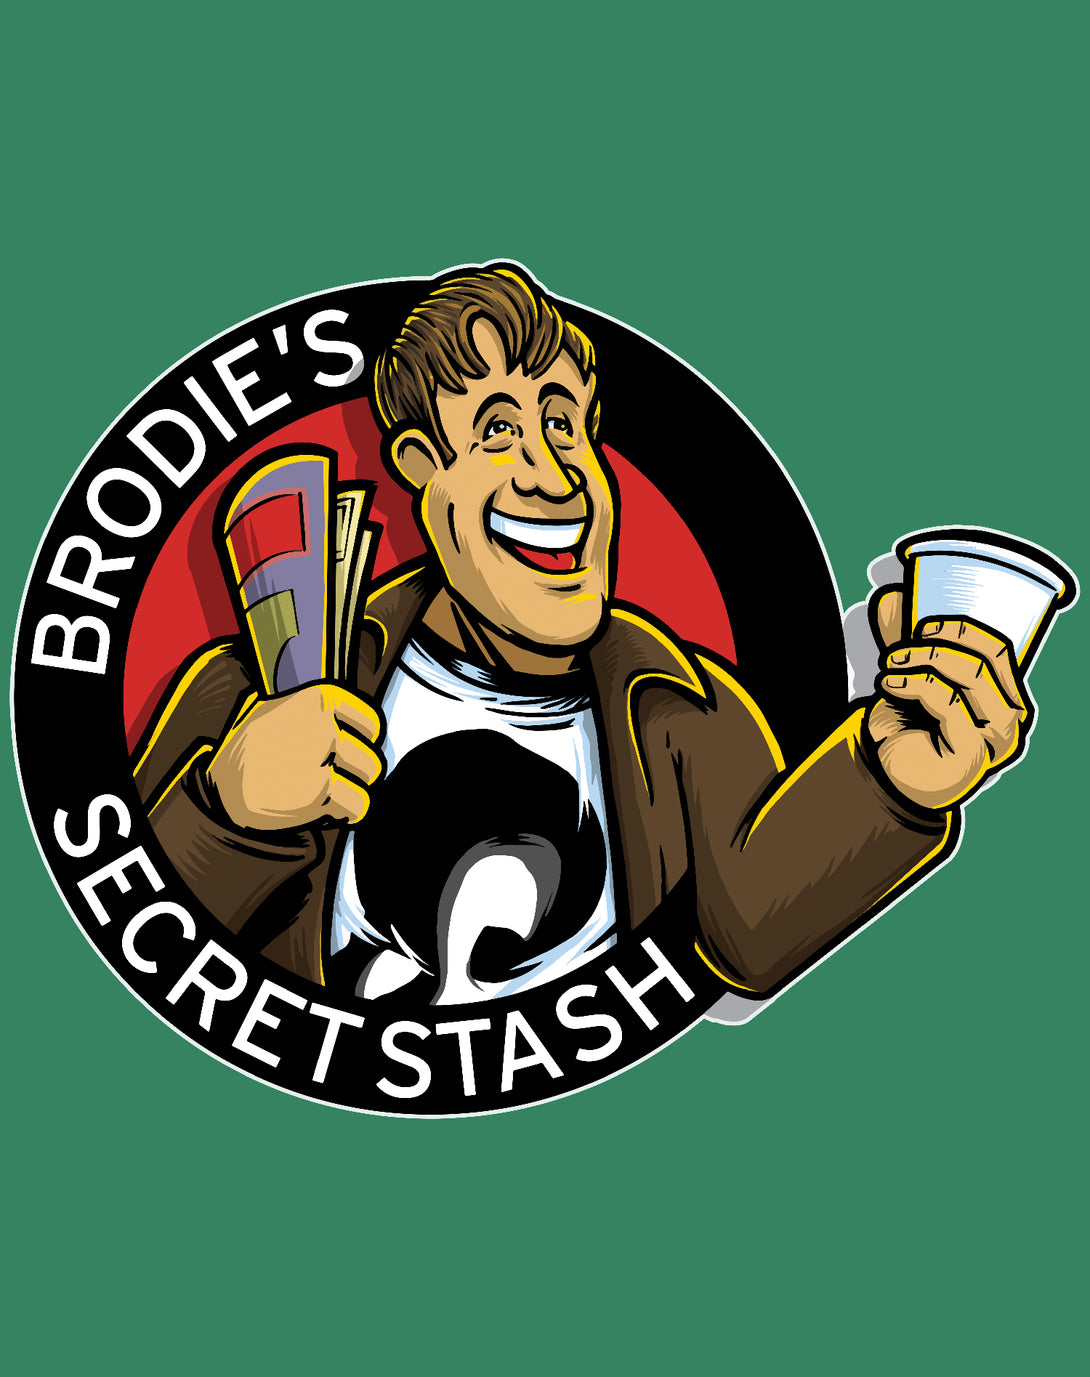 Kevin Smith Jay & Silent Bob Reboot Brodie's Secret Stash Comic Book Store Logo Official Men's T-Shirt Green - Urban Species Design Close Up